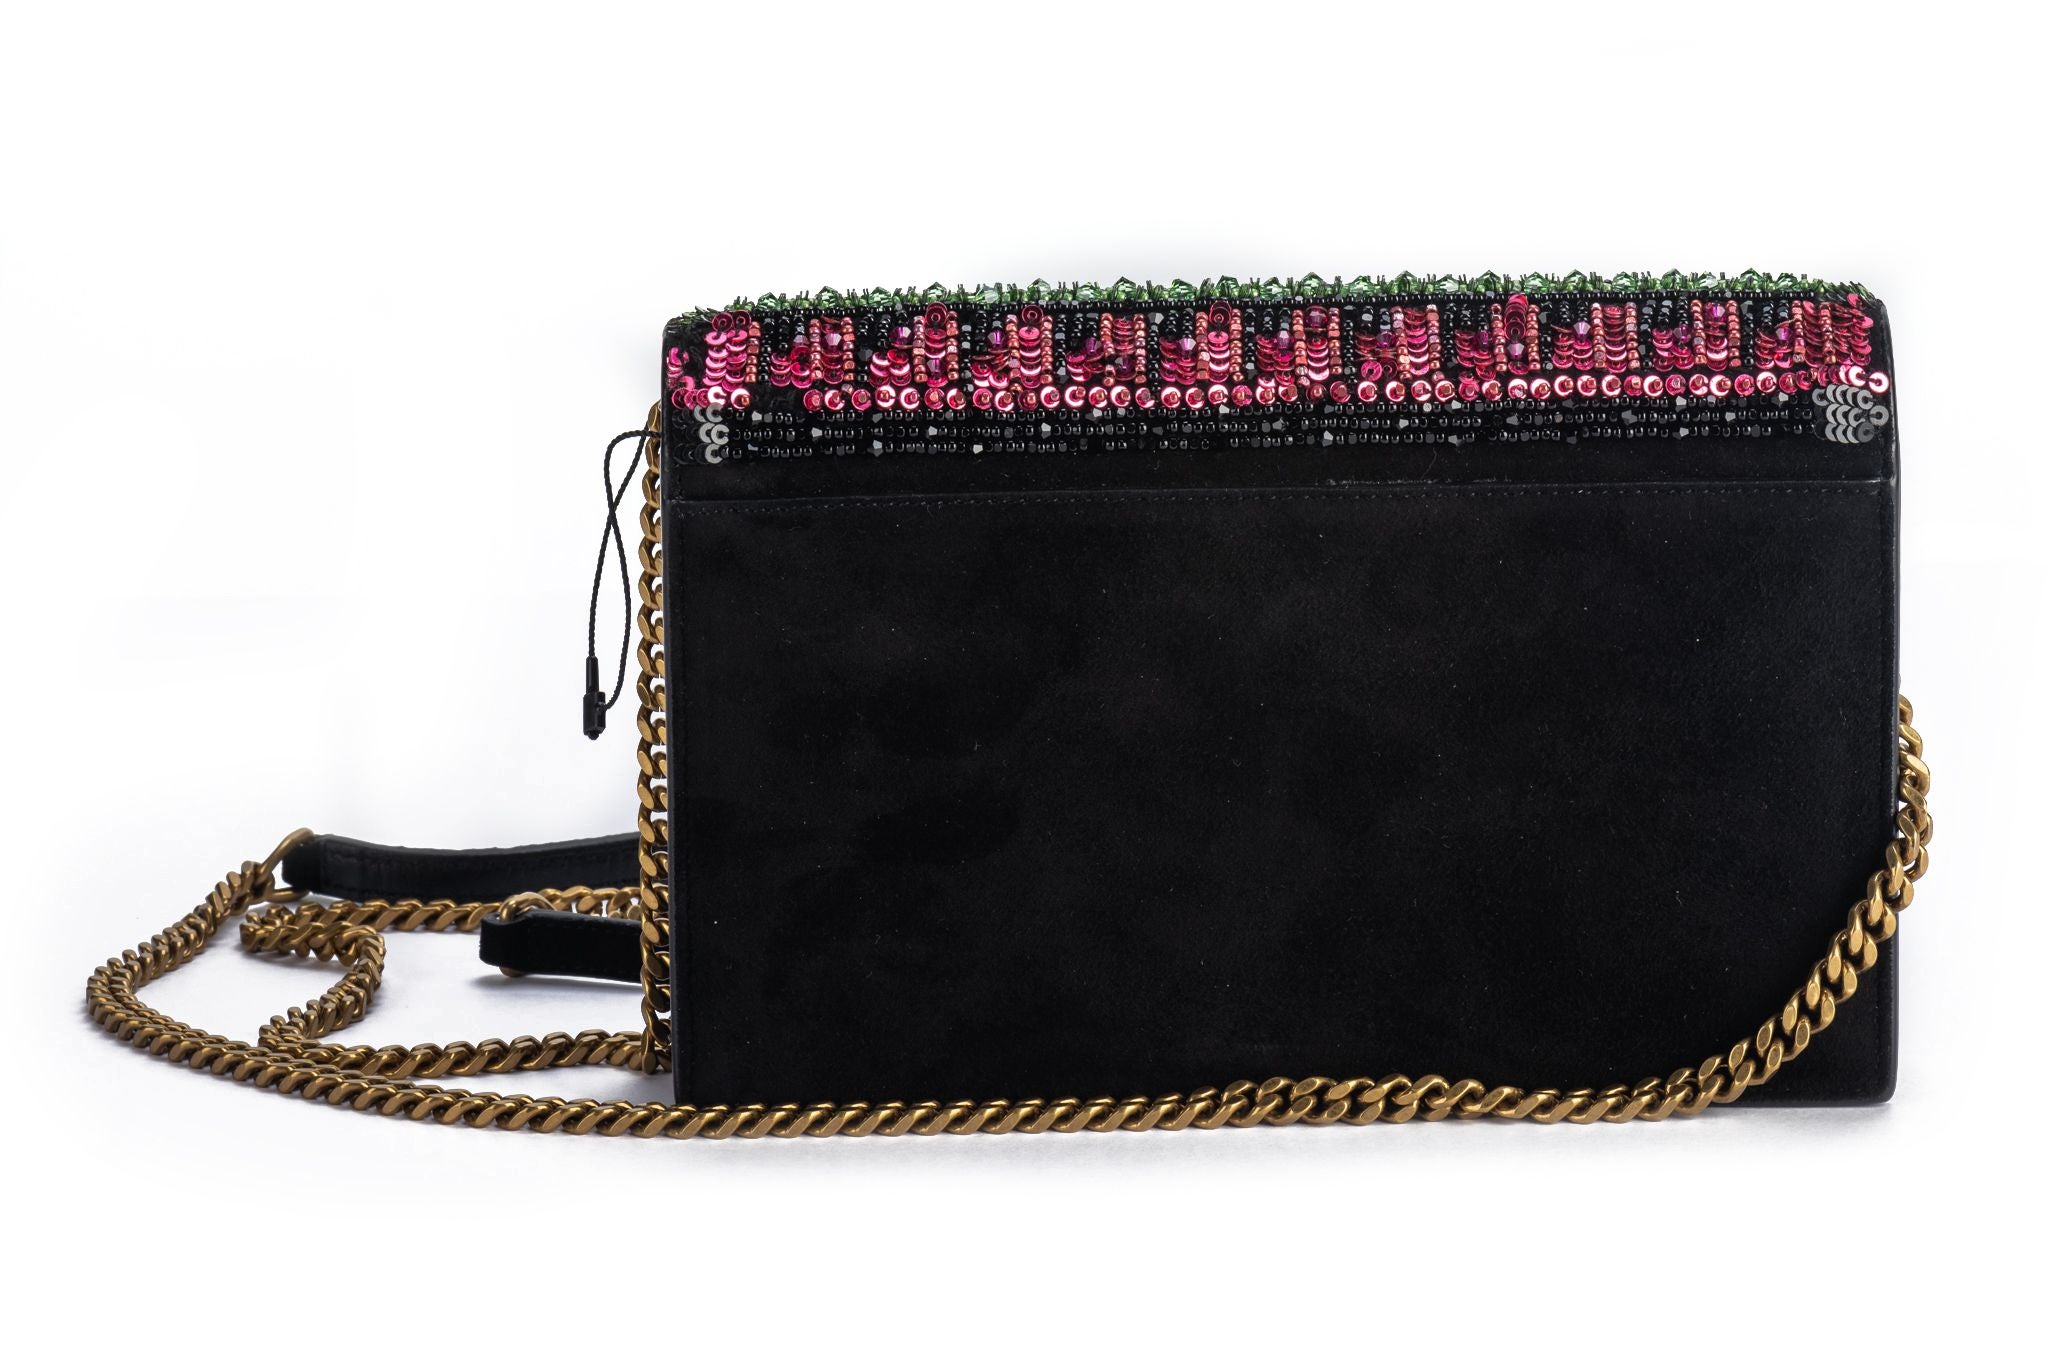 Suede Purse Black Vintage Bags, Handbags & Cases for sale | eBay